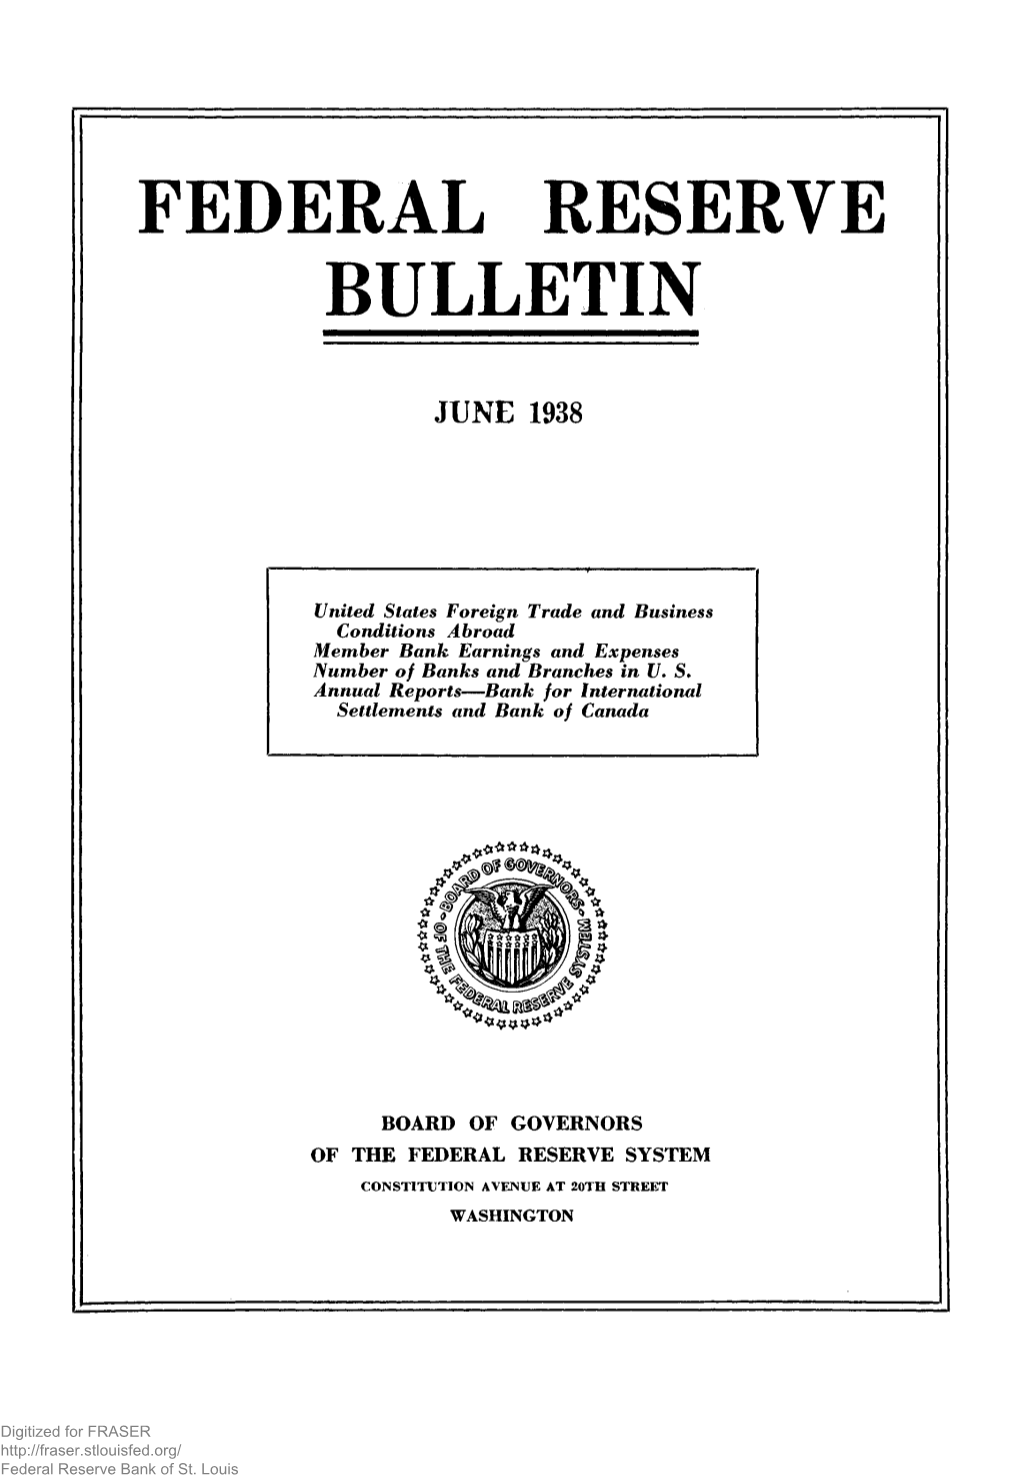 Federal Reserve Bulletin June 1938